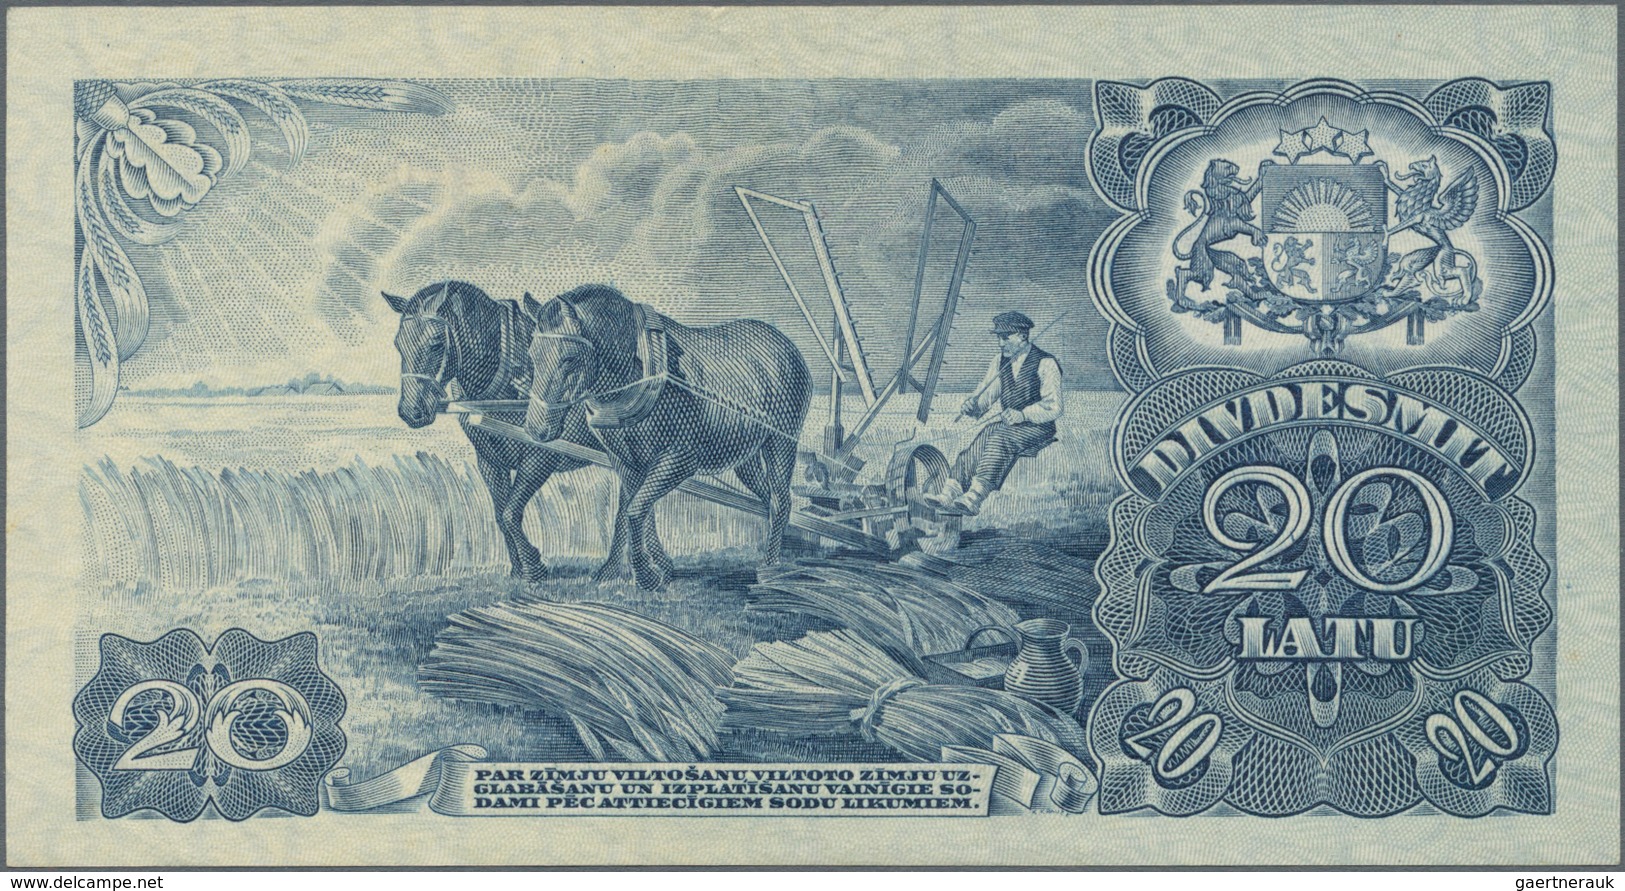 Latvia / Lettland: 20 Latu 1940, P.33a, Extraordinary Rare Banknote In Almost Excellent Condition Wi - Lettonie